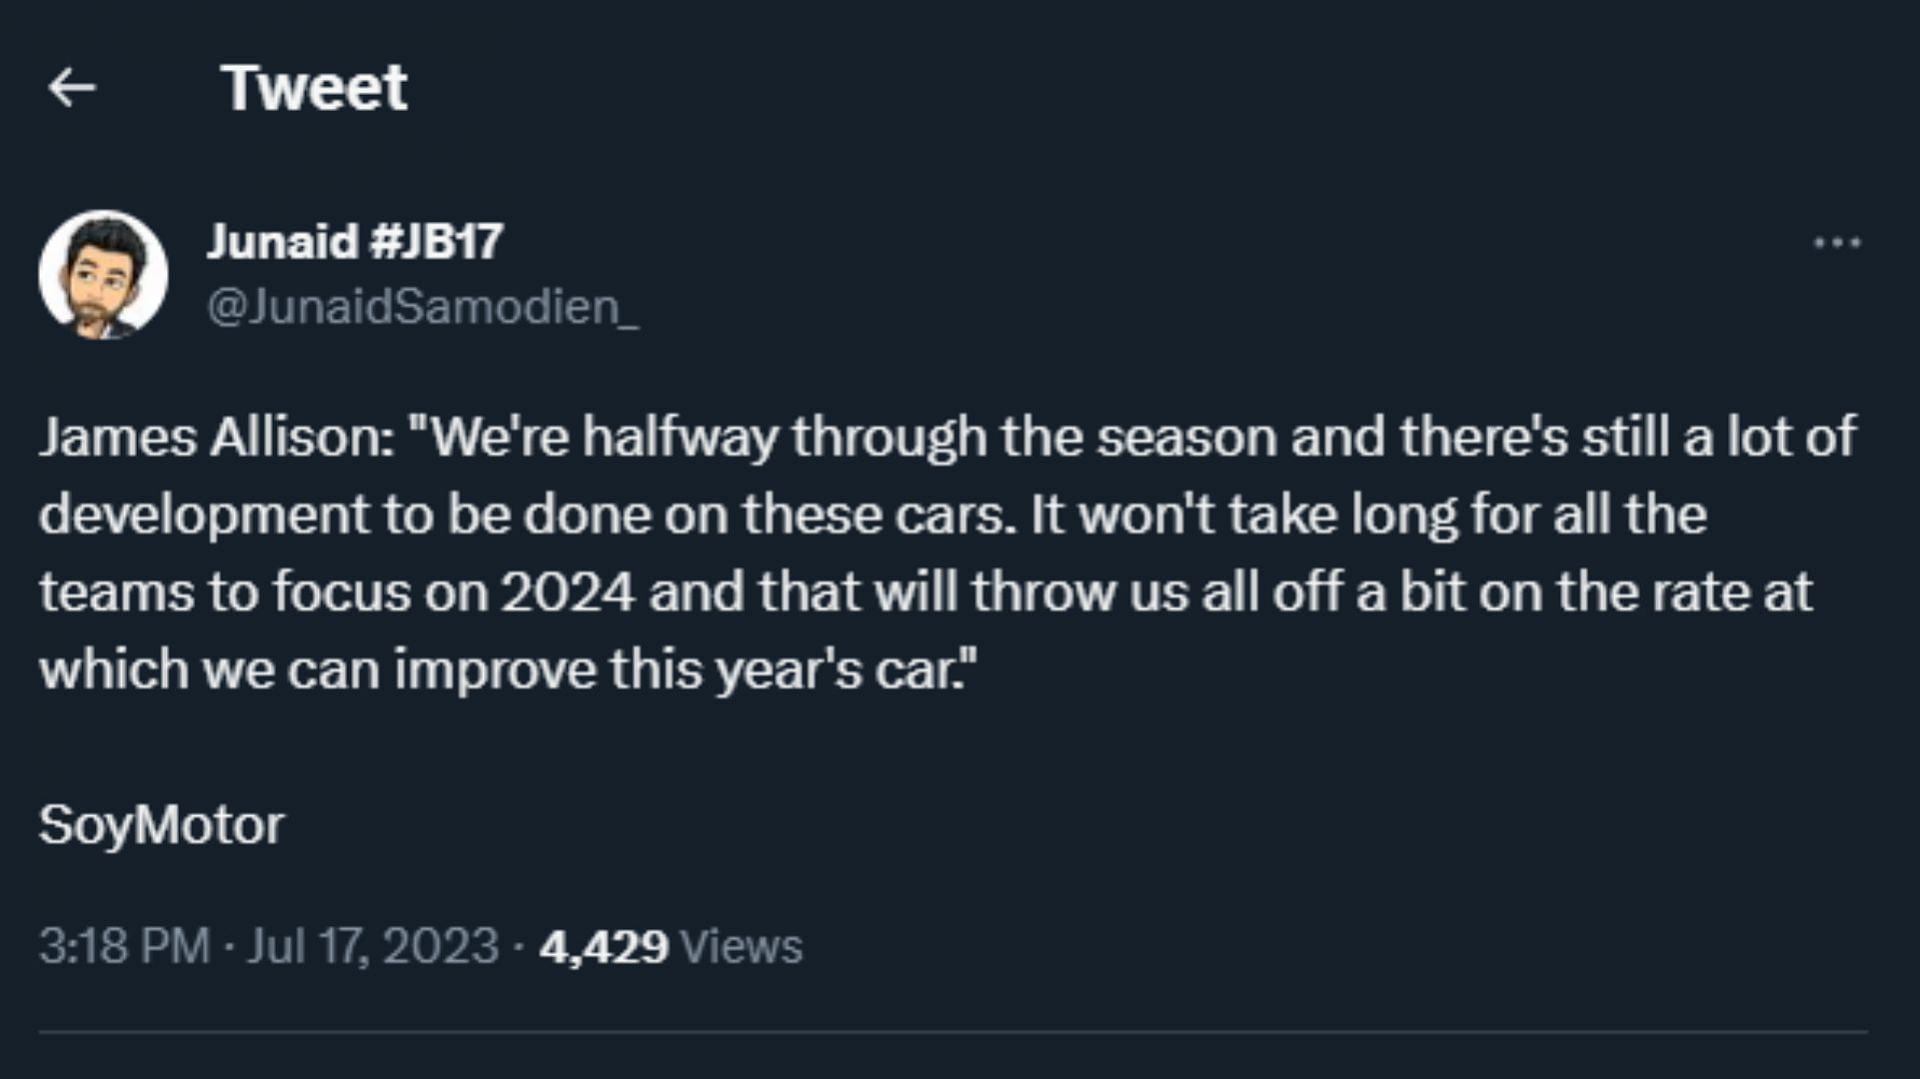 Tweet about Mercedes technical director James Allison on bringing upgrades for both 2023 and 2024 Mercedes F1 cars (Image via Sportskeeda)